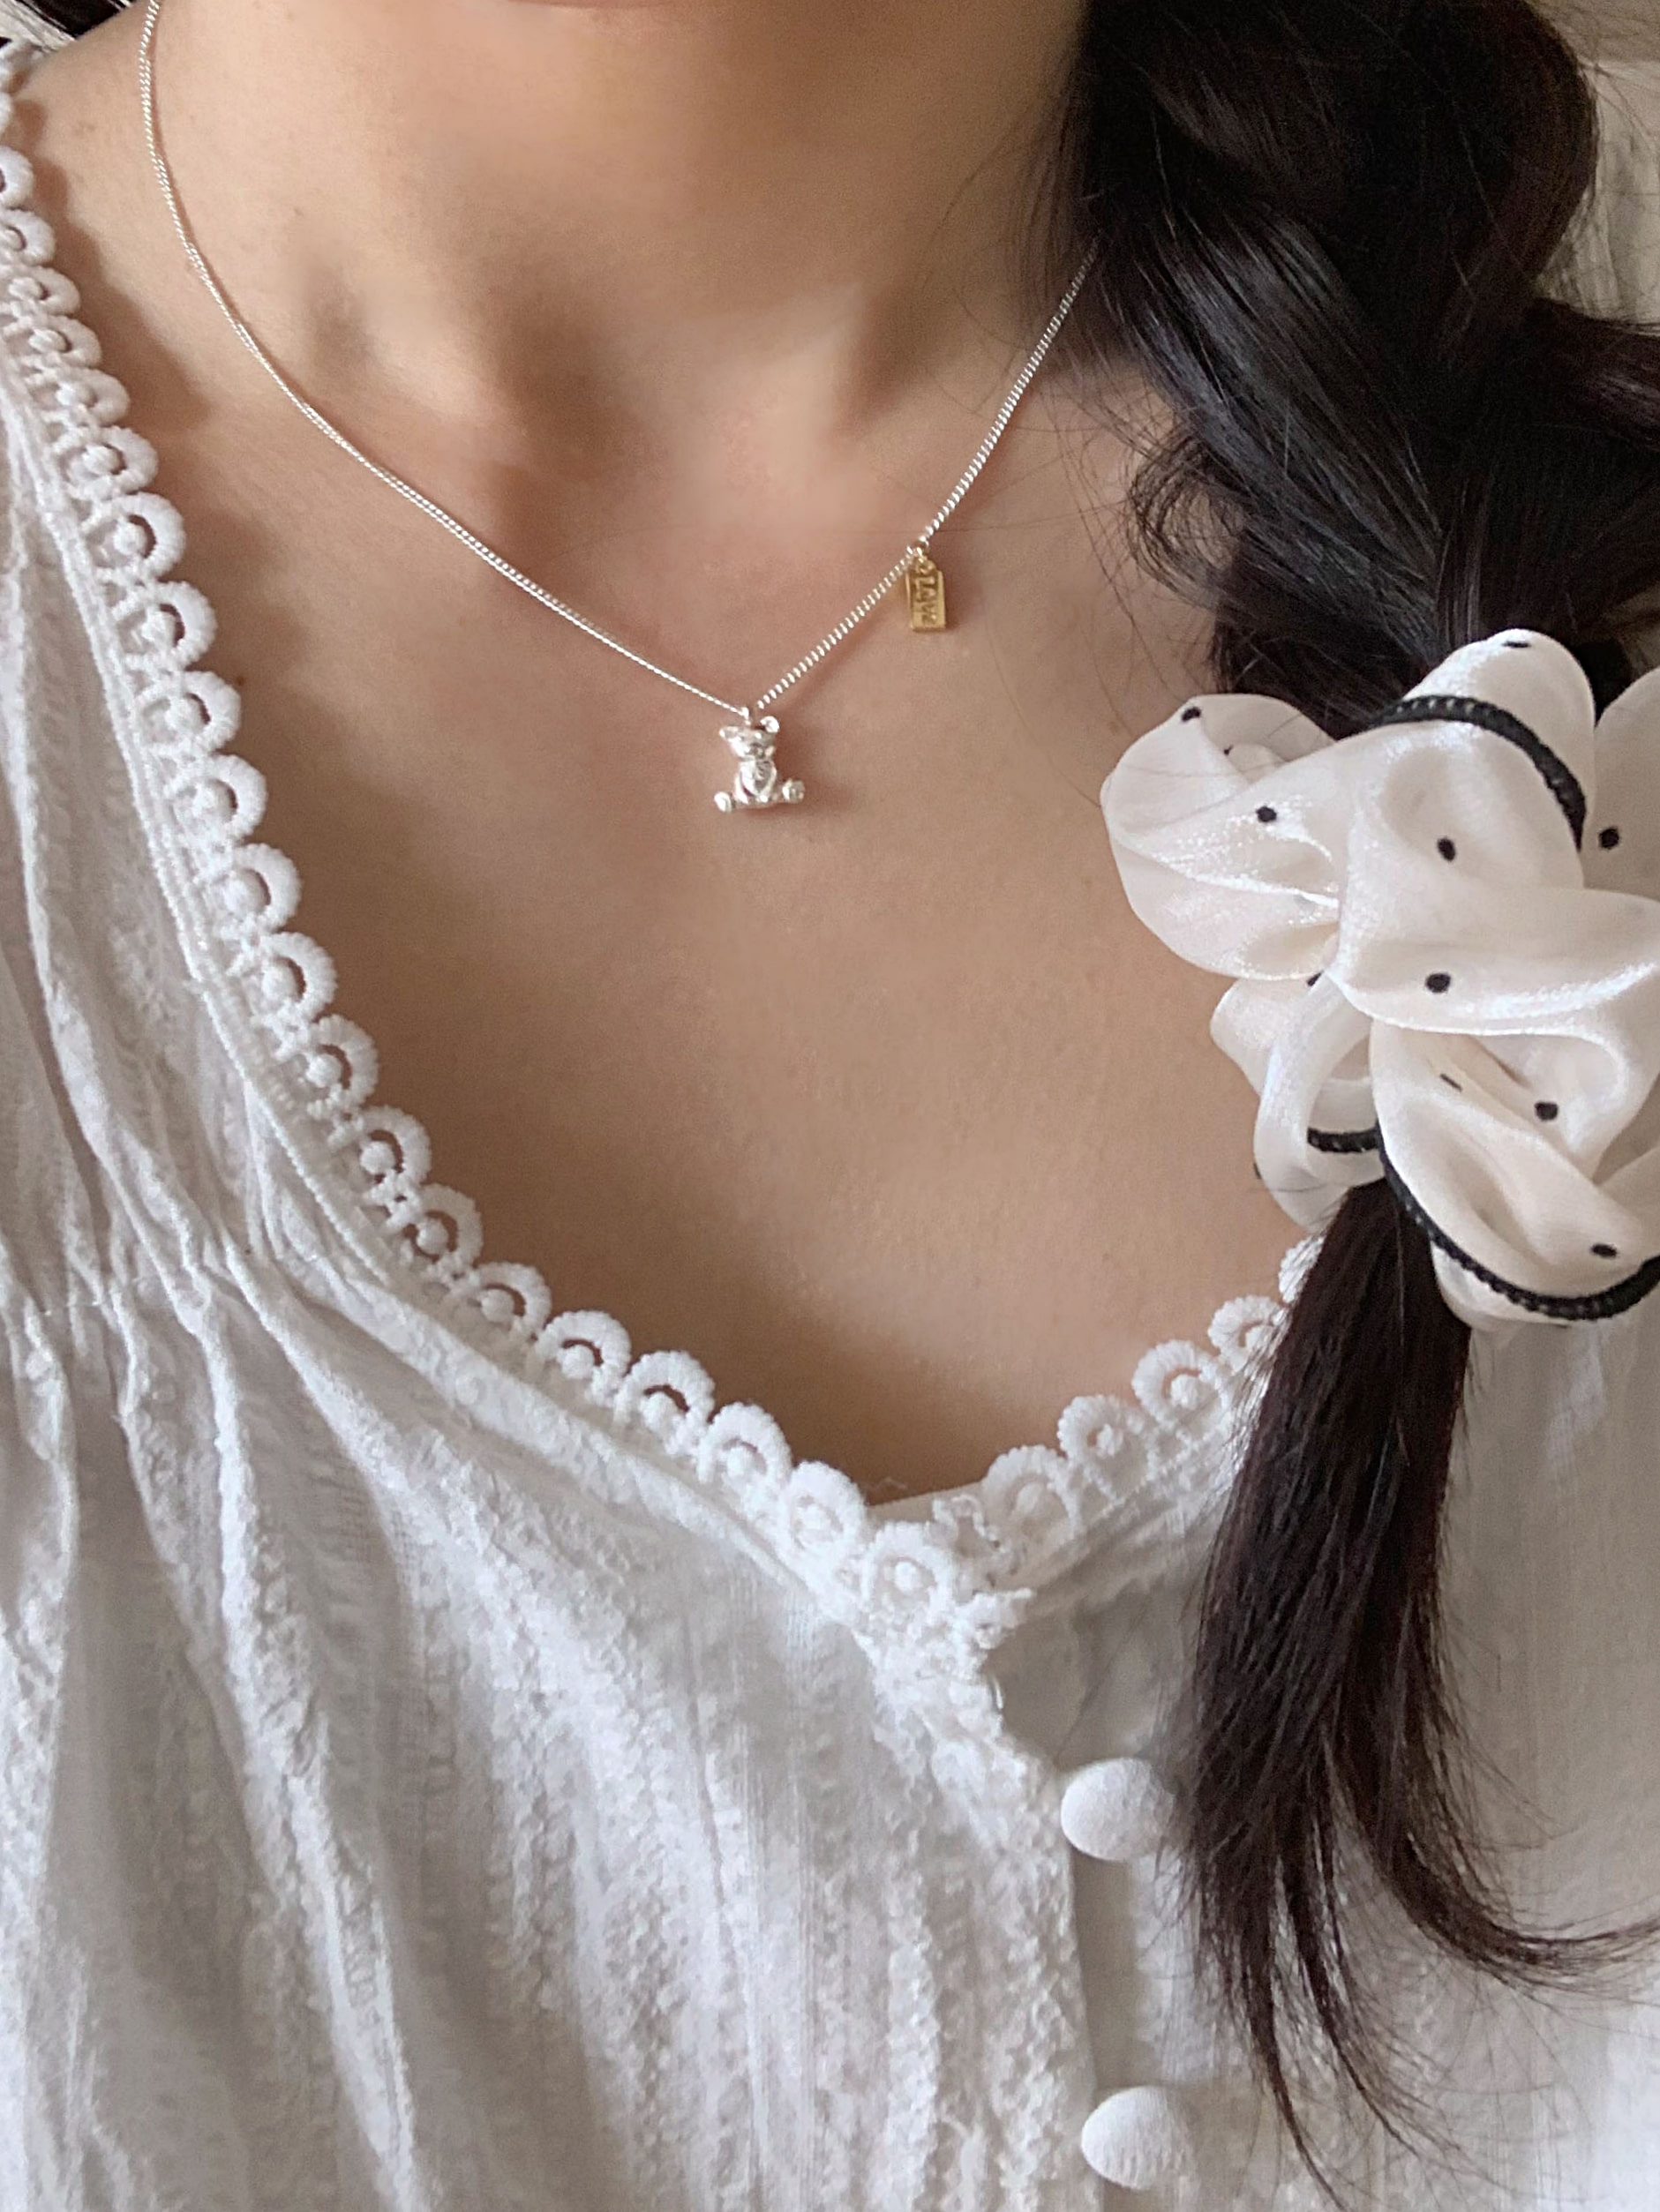 [92.5 Silver] Cute teddy bear pendant necklace